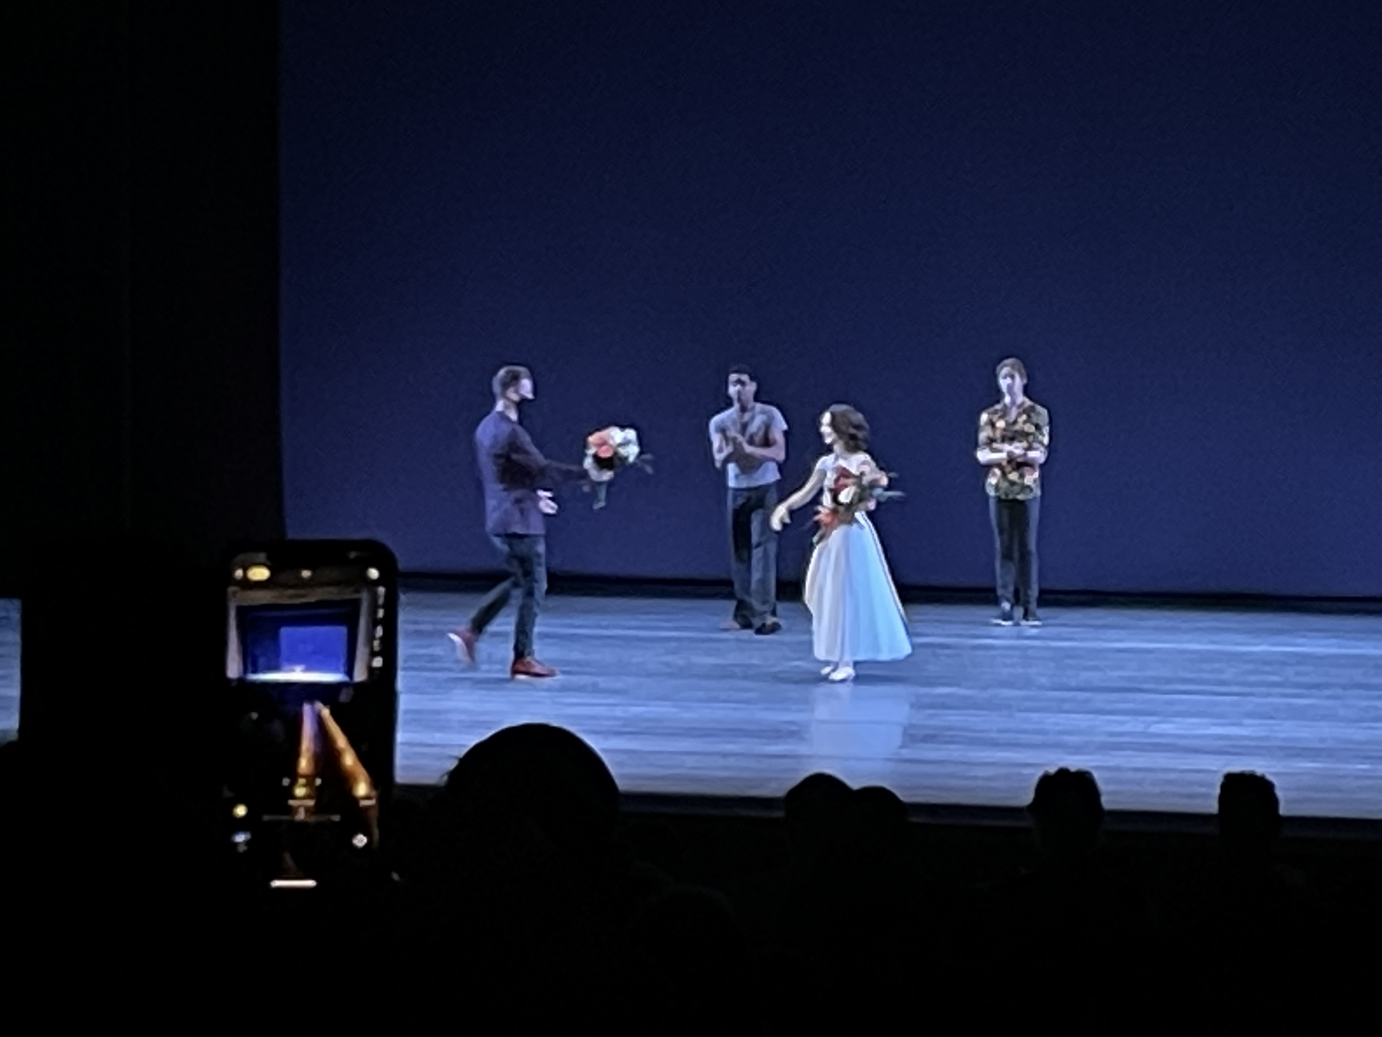 In a blue romantic-length tutu, Lauren Lovette accepts a bouquet of flowers. Dancers behind her applaud.